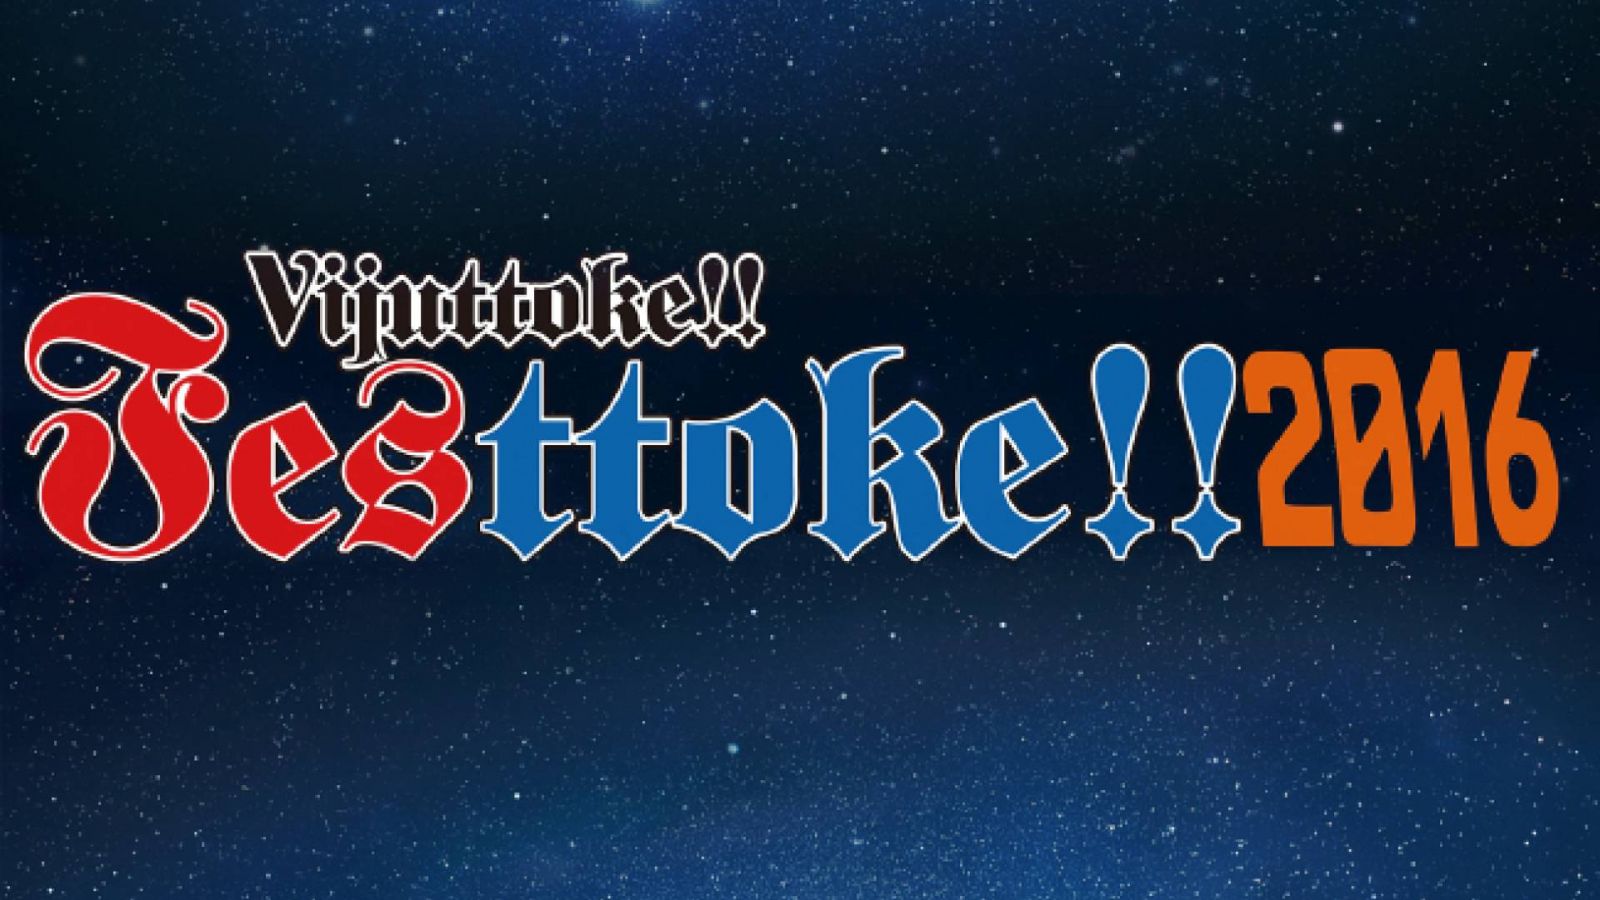 Vijuttoke!!Festokke!!2016 - część 1 © Vijuttoke!! Festtoke!!2016